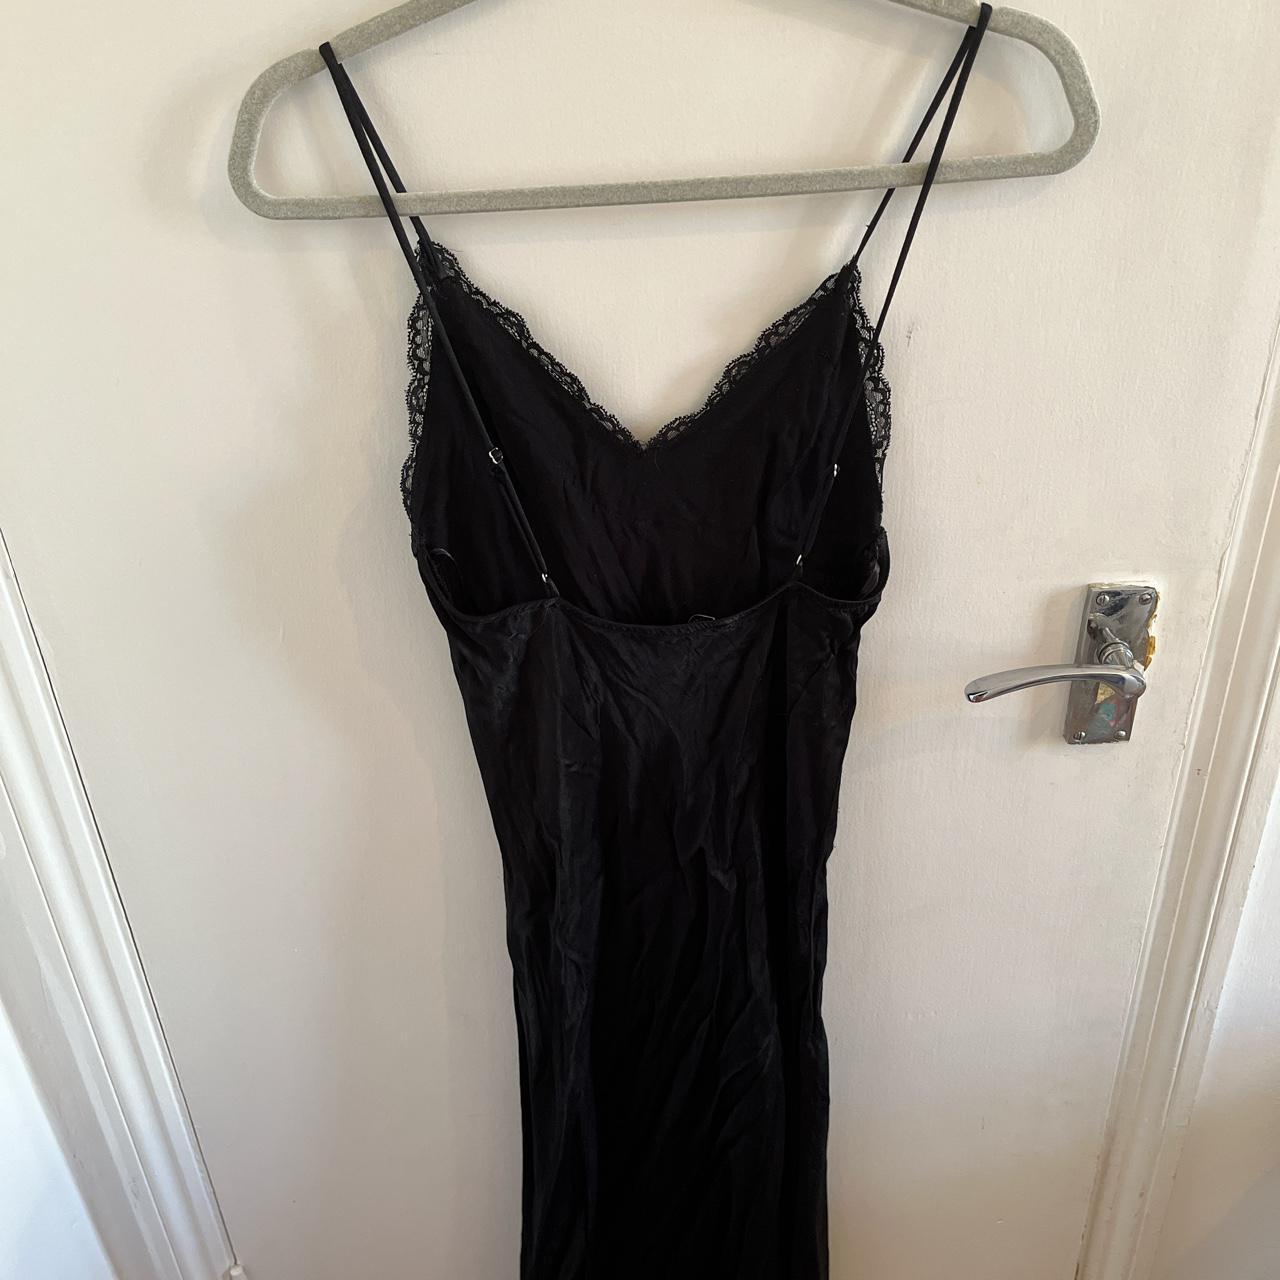 Berska long black satin slip dress. Size medium - Depop